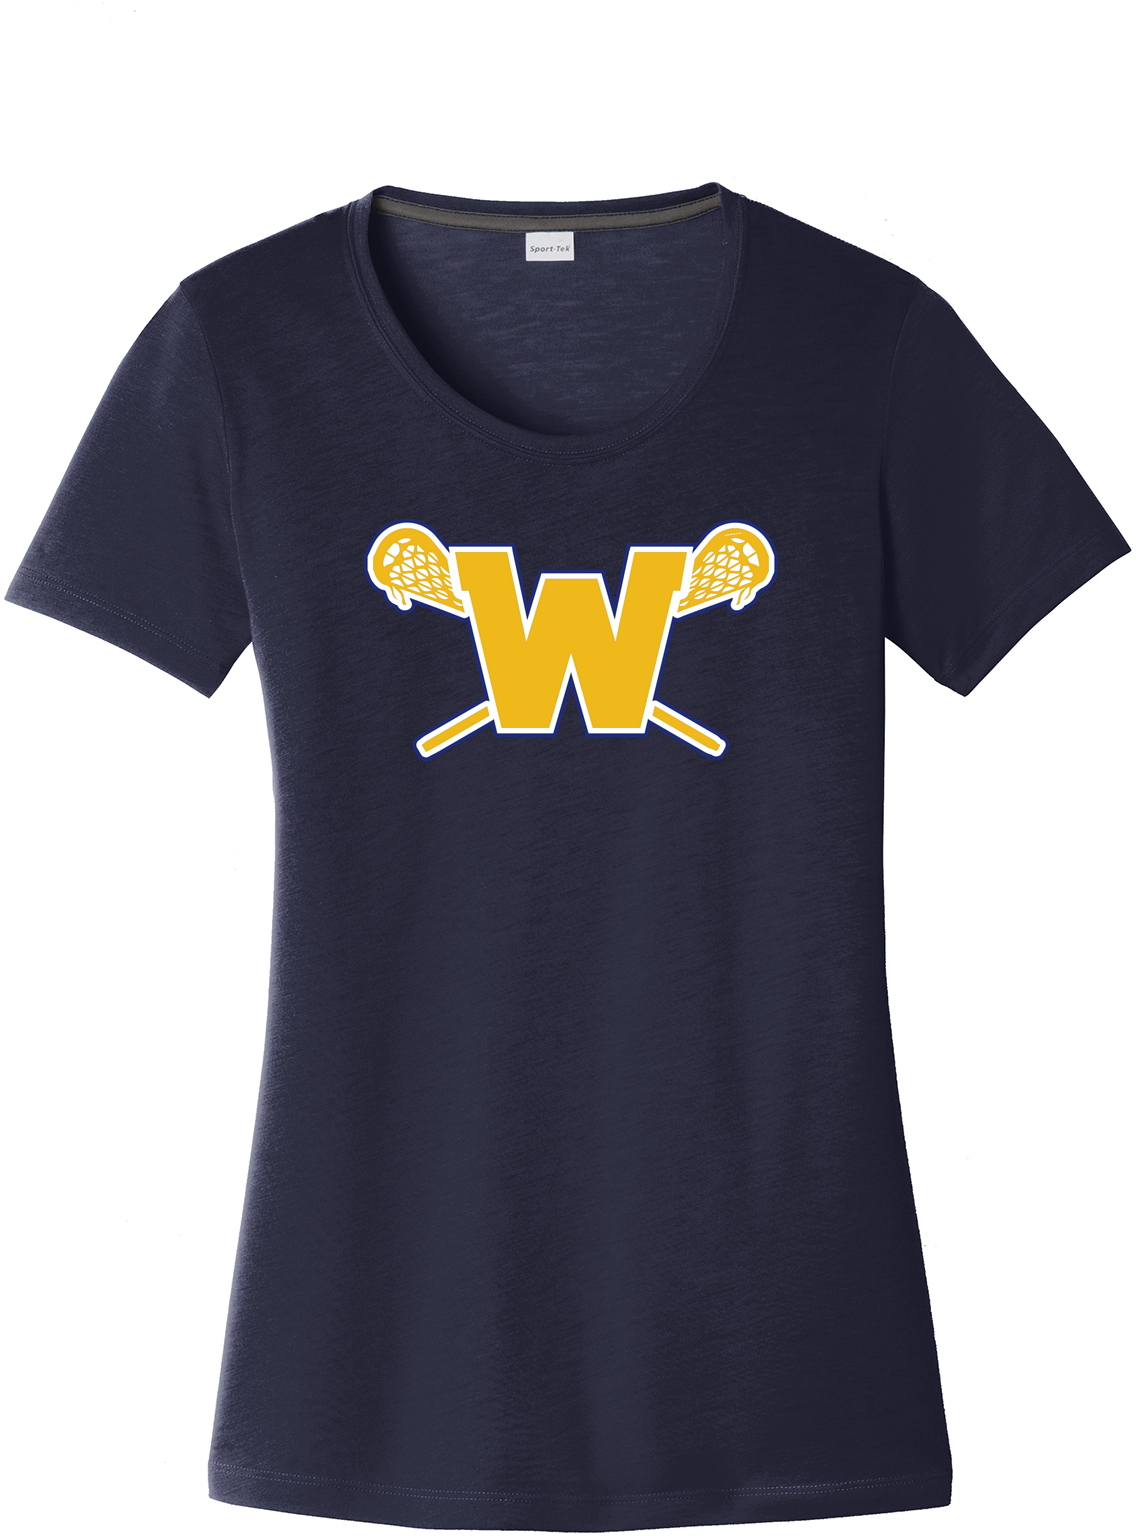 Webster Lacrosse Navy Women's CottonTouch Performance T-Shirt